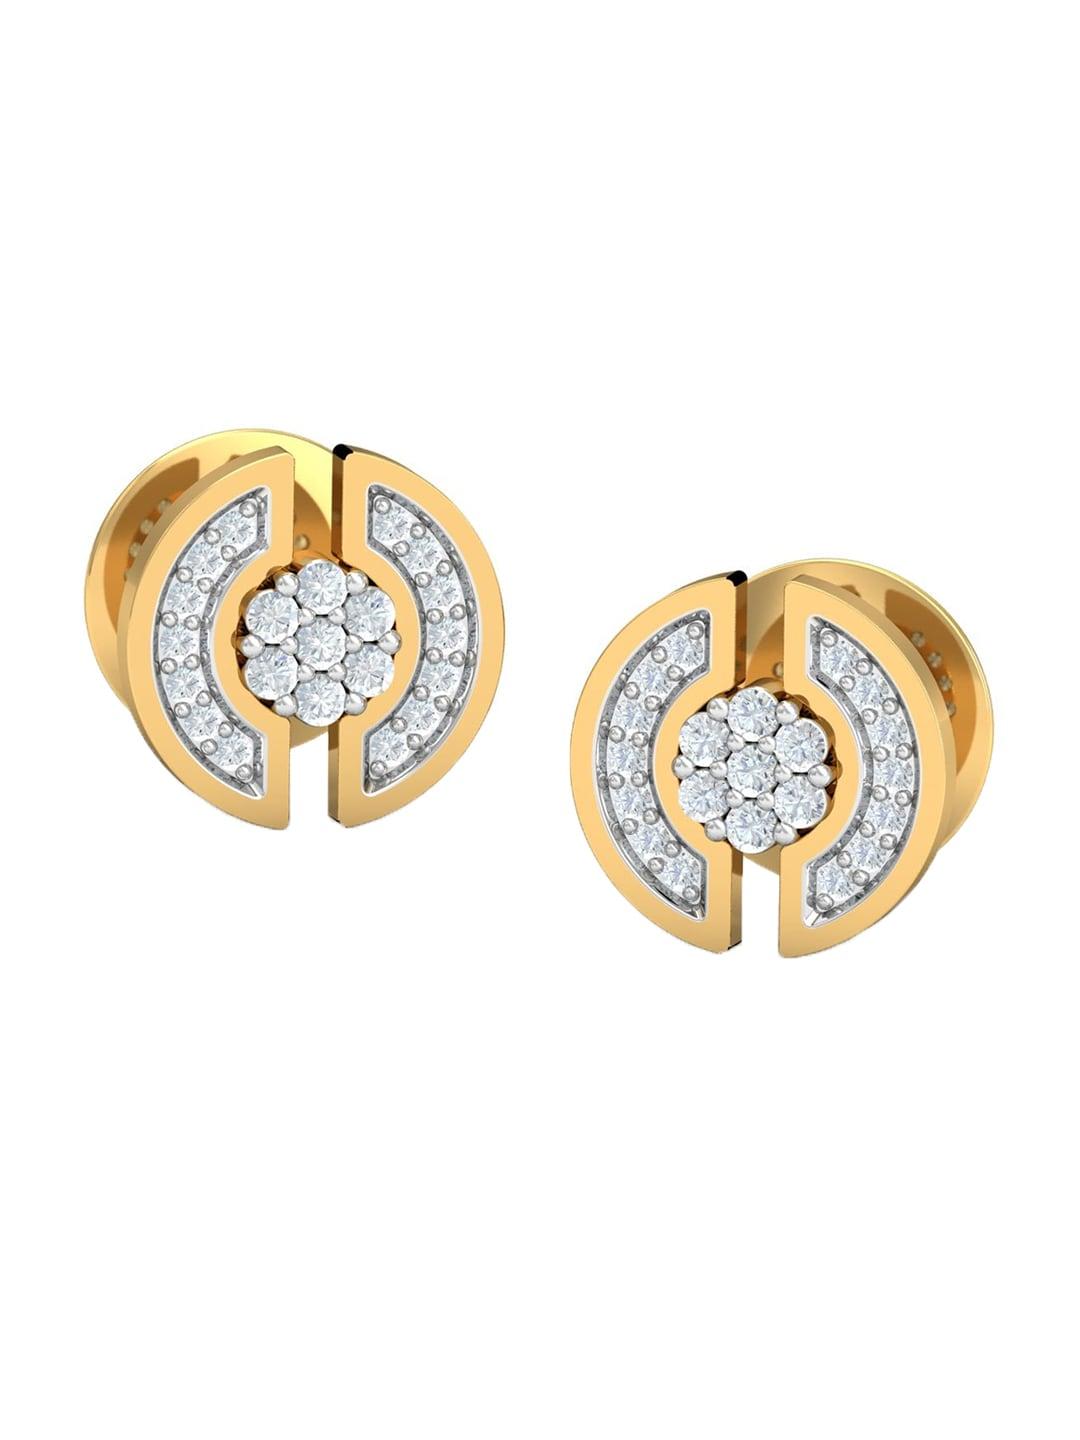 KUBERBOX Adora 18KT Gold Diamond-Studded Earrings-2.2gm